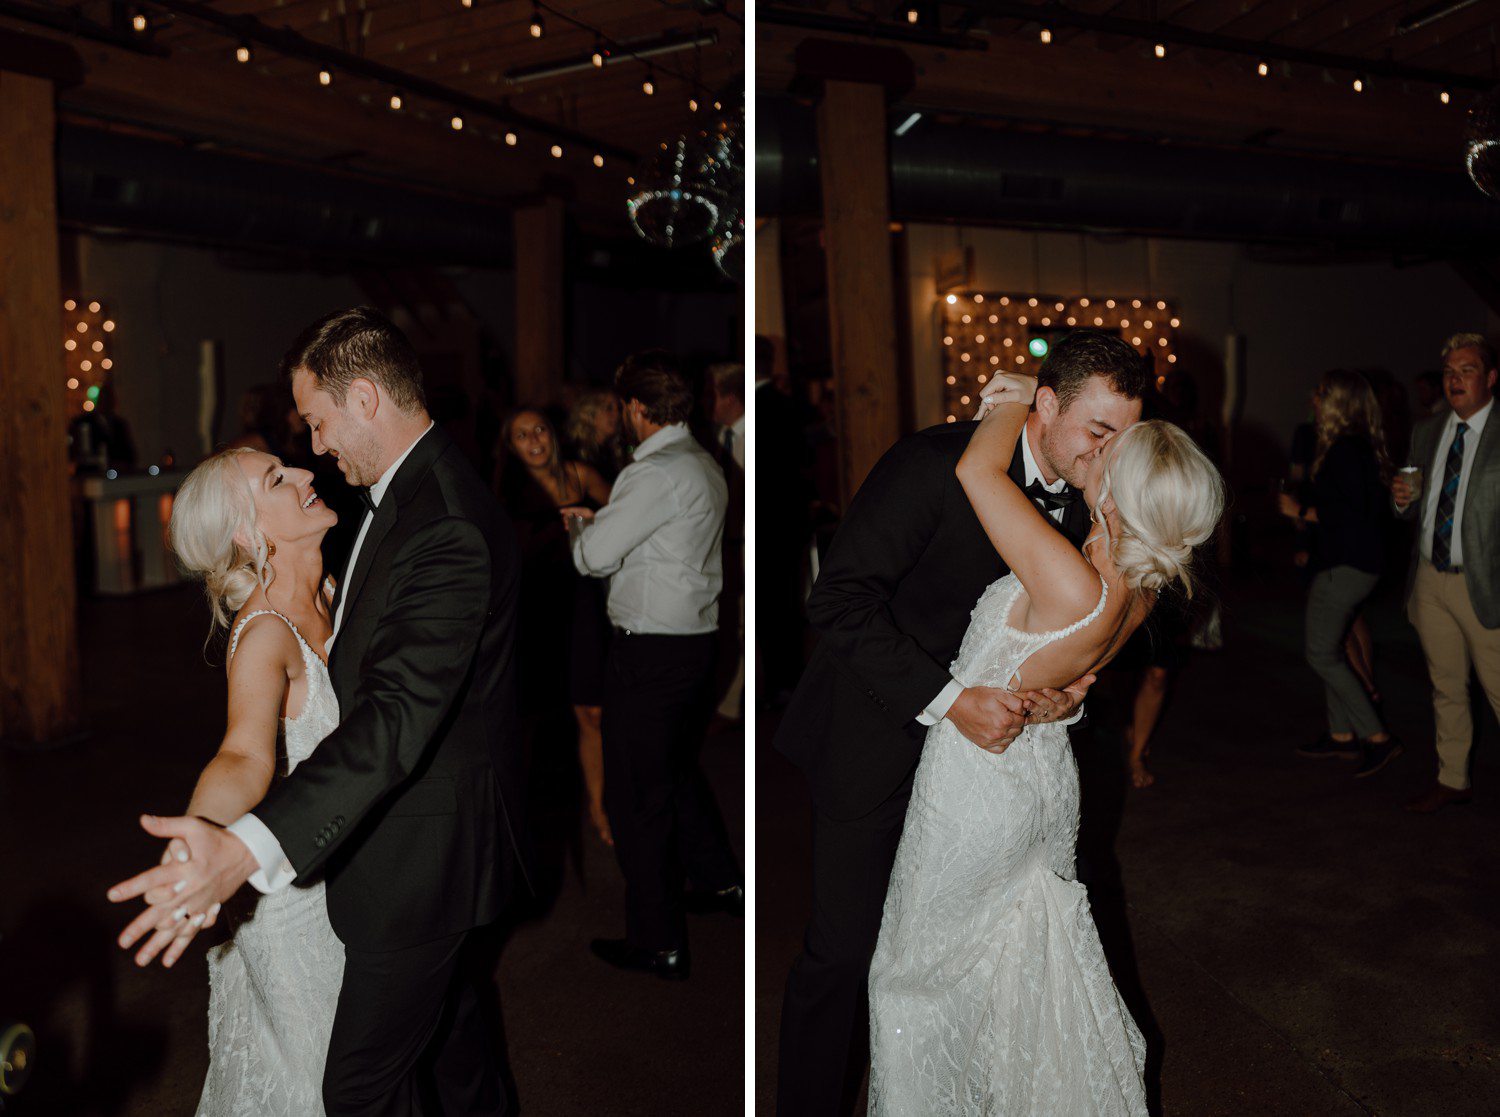 Bride and Groom dancing at wedding reception